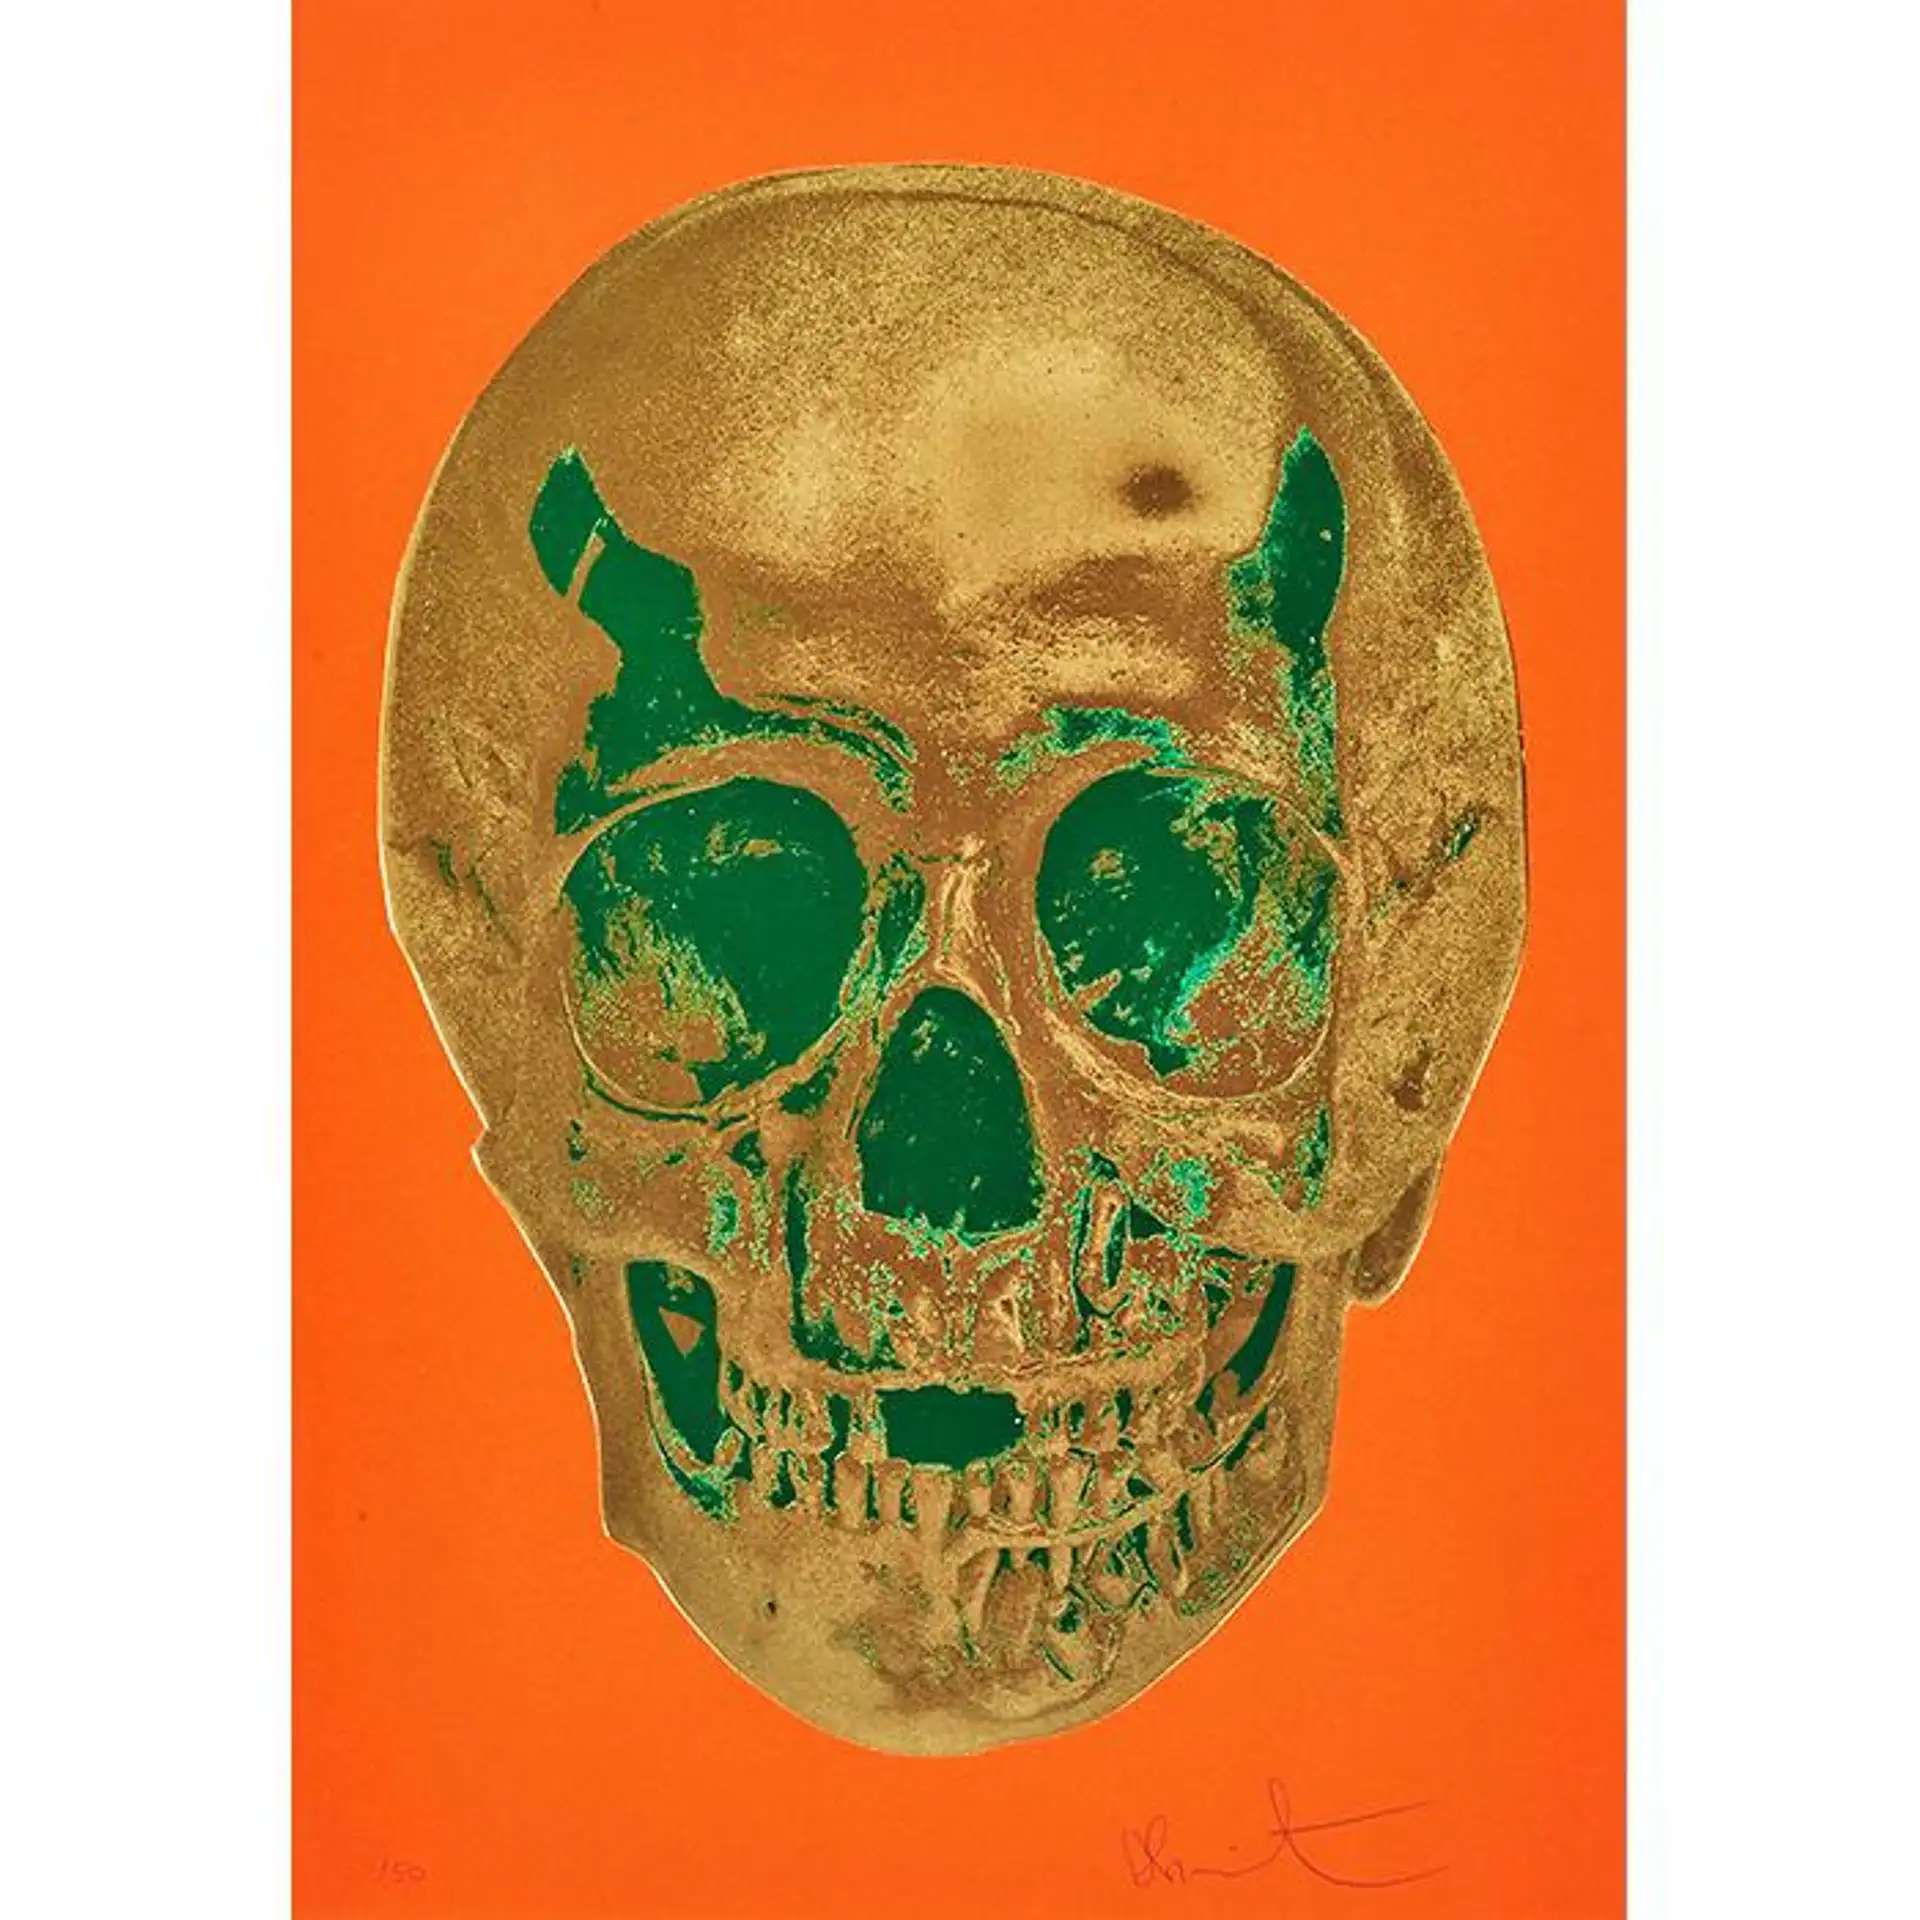 Till Death Do Us Part (bright orange african gold emerald) by Damien Hirst